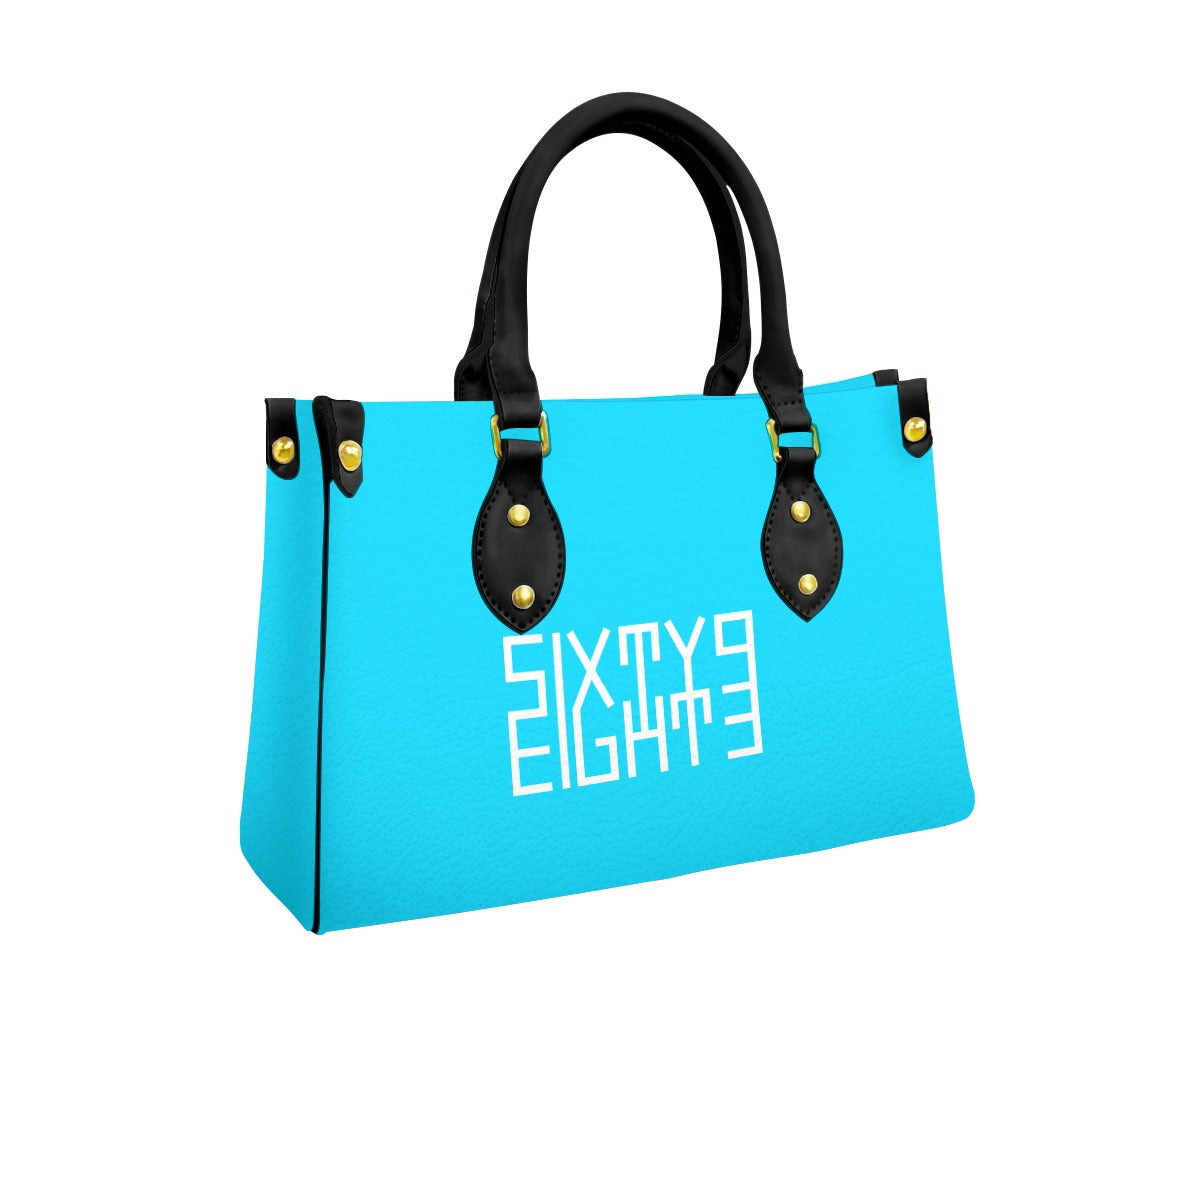 Sixty Eight 93 Logo White Aqua Blue Women's Tote Bag With Black Handle